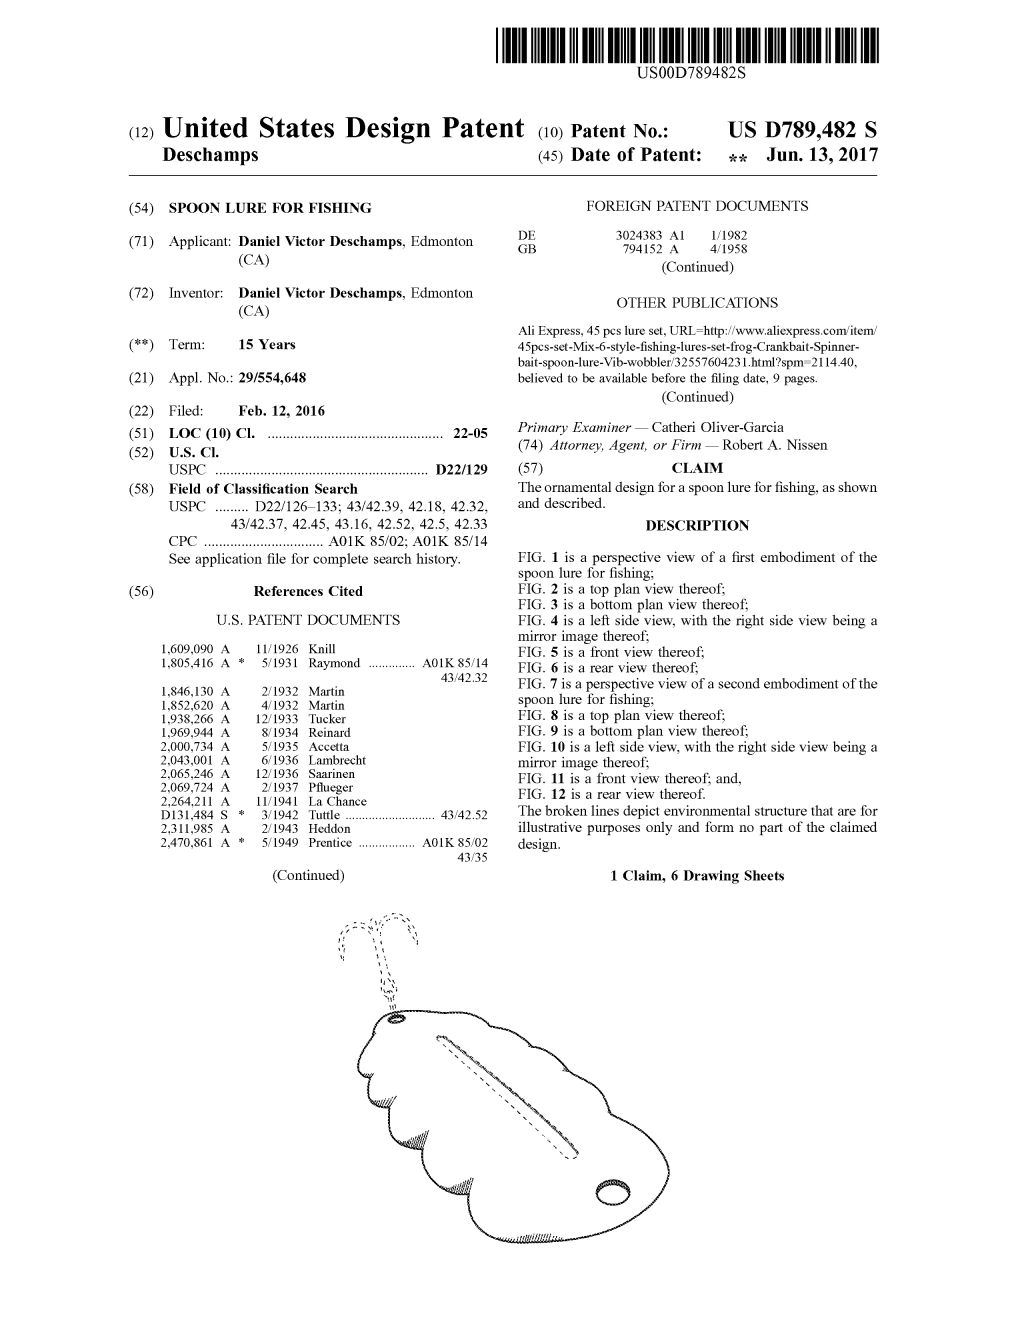 (12) United States Design Patent (10) Patent No.: USD789,482 S Deschamps (45) Date of Patent: Jun